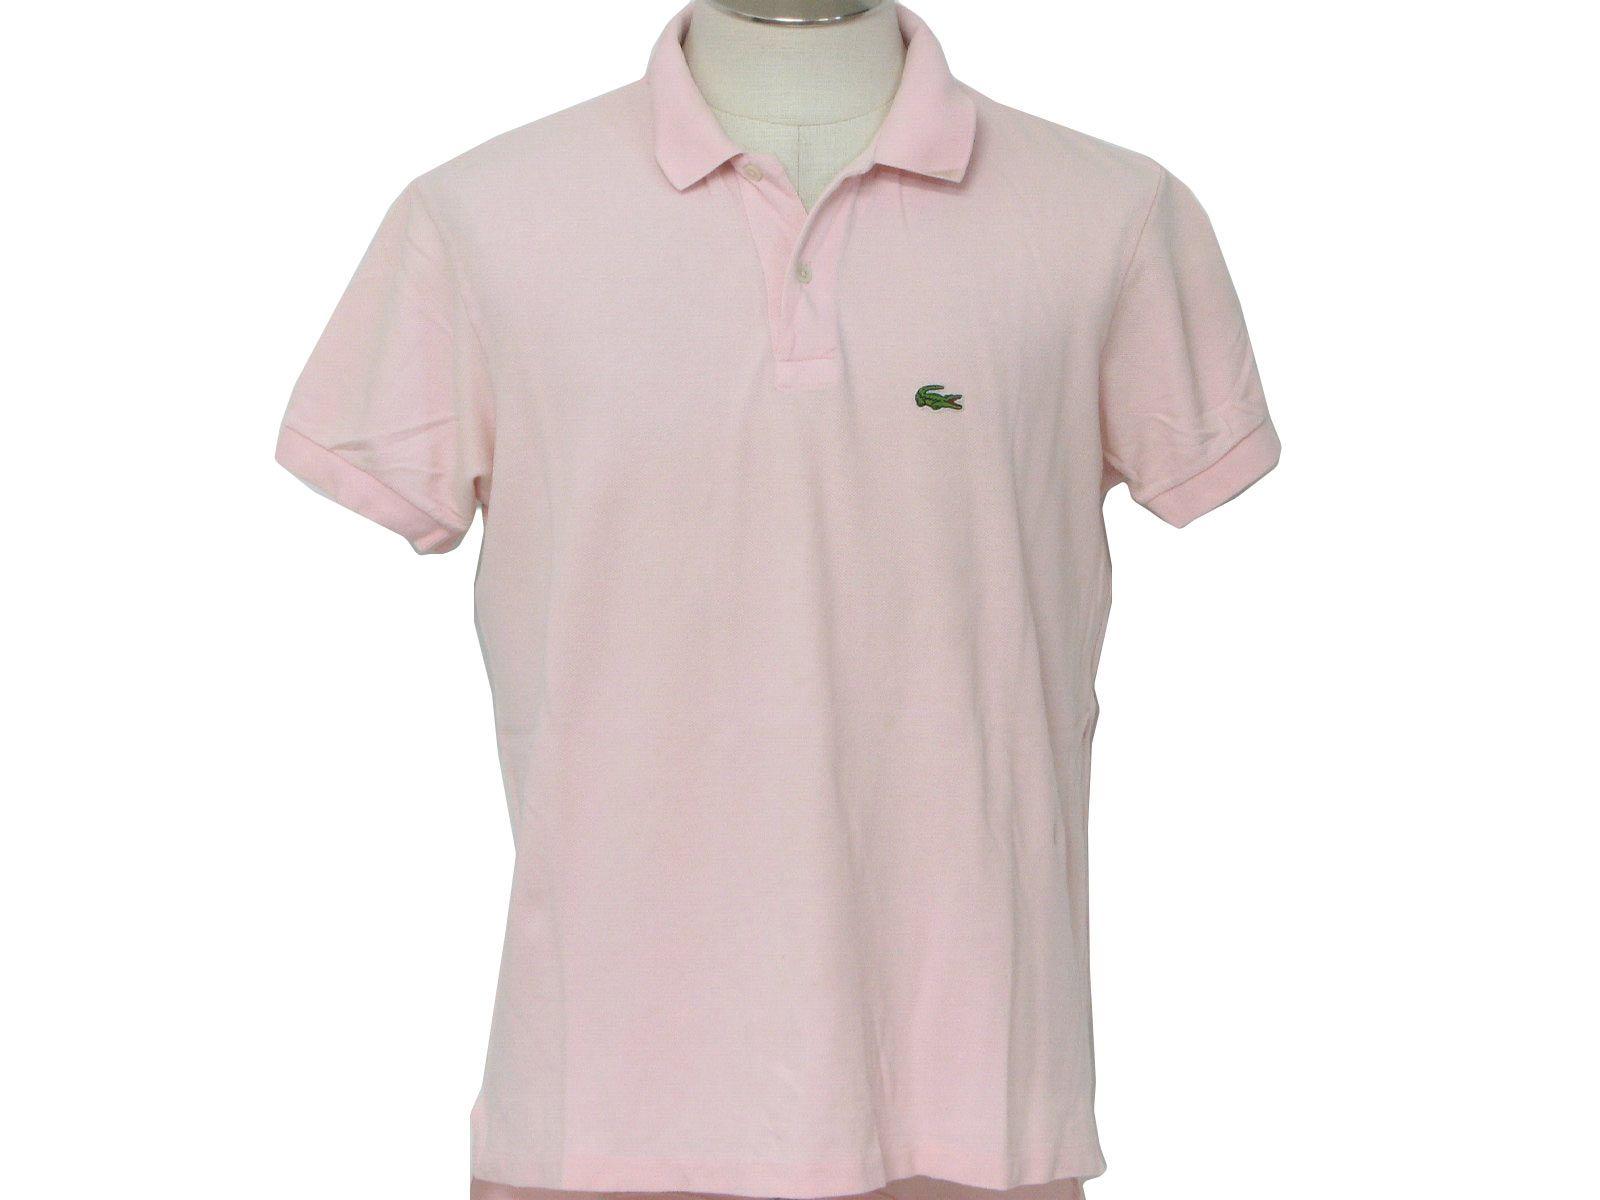 1980s Izod Logo - Vintage Izod Lacoste 80's Shirt: 80s -Izod Lacoste- Mens pink woven